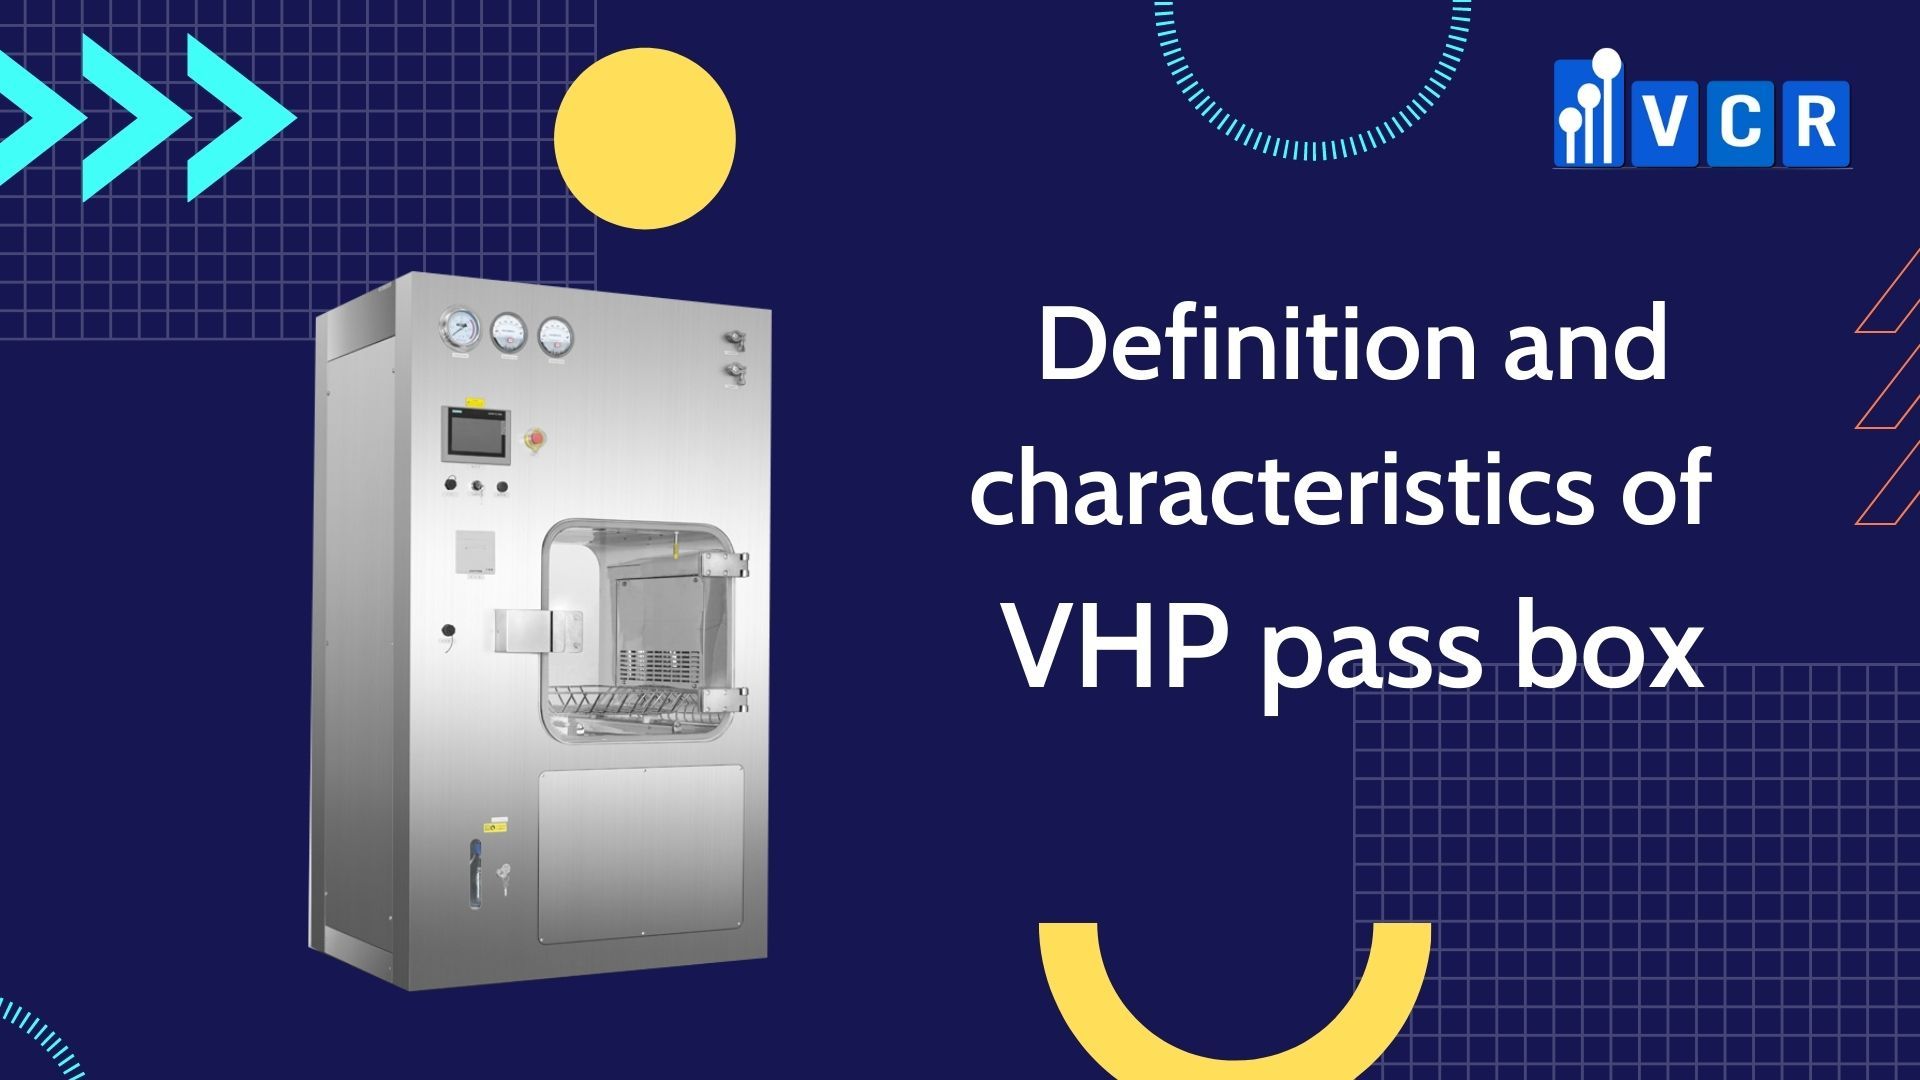 VHP pass box definition and characteristics